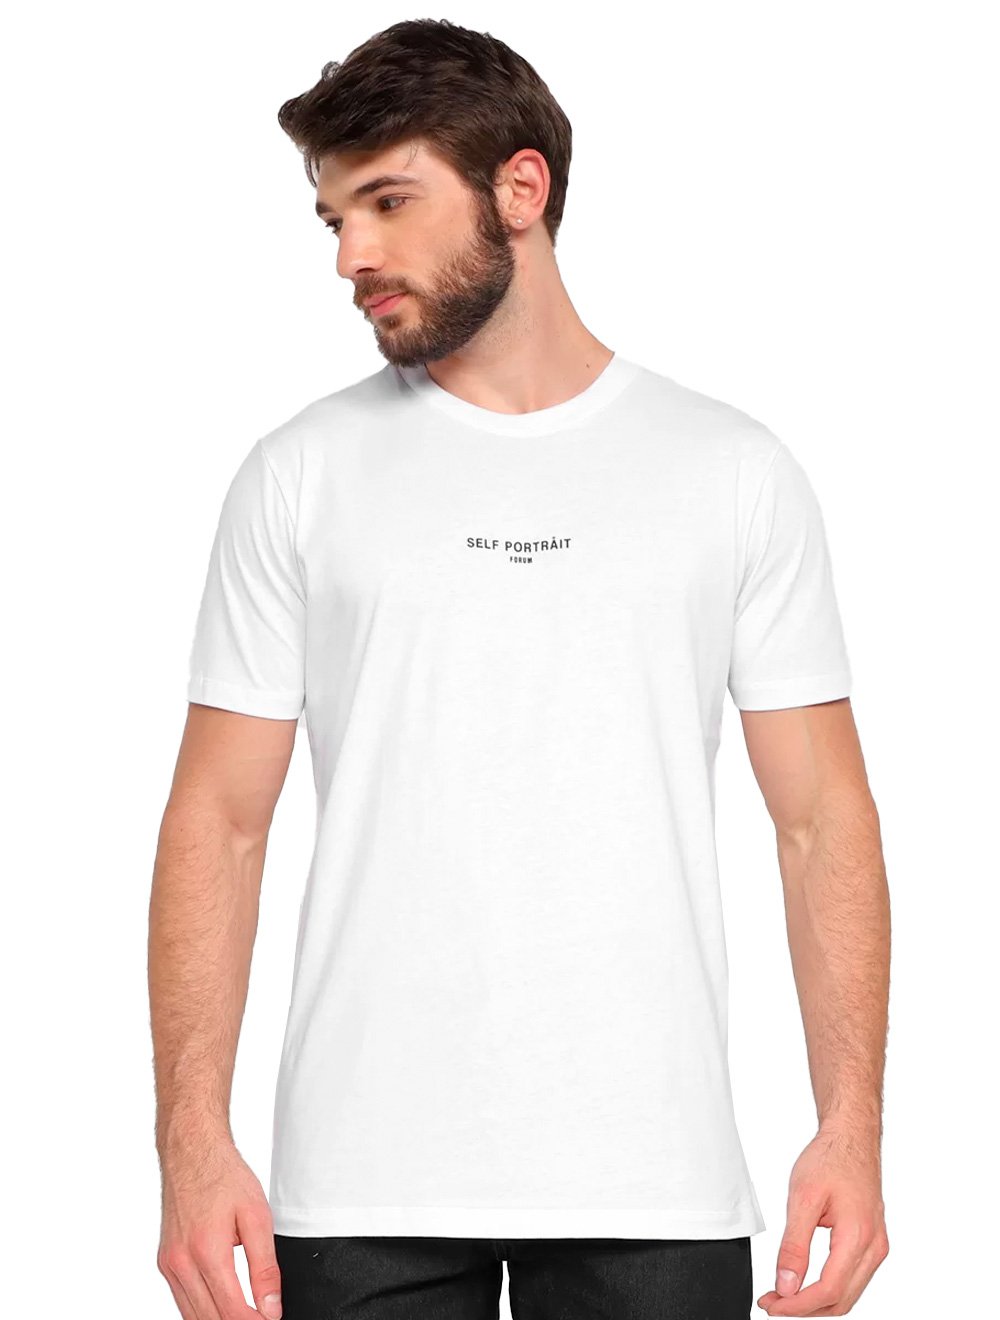 Camiseta Forum Masculina Slim Self Portrait Branca